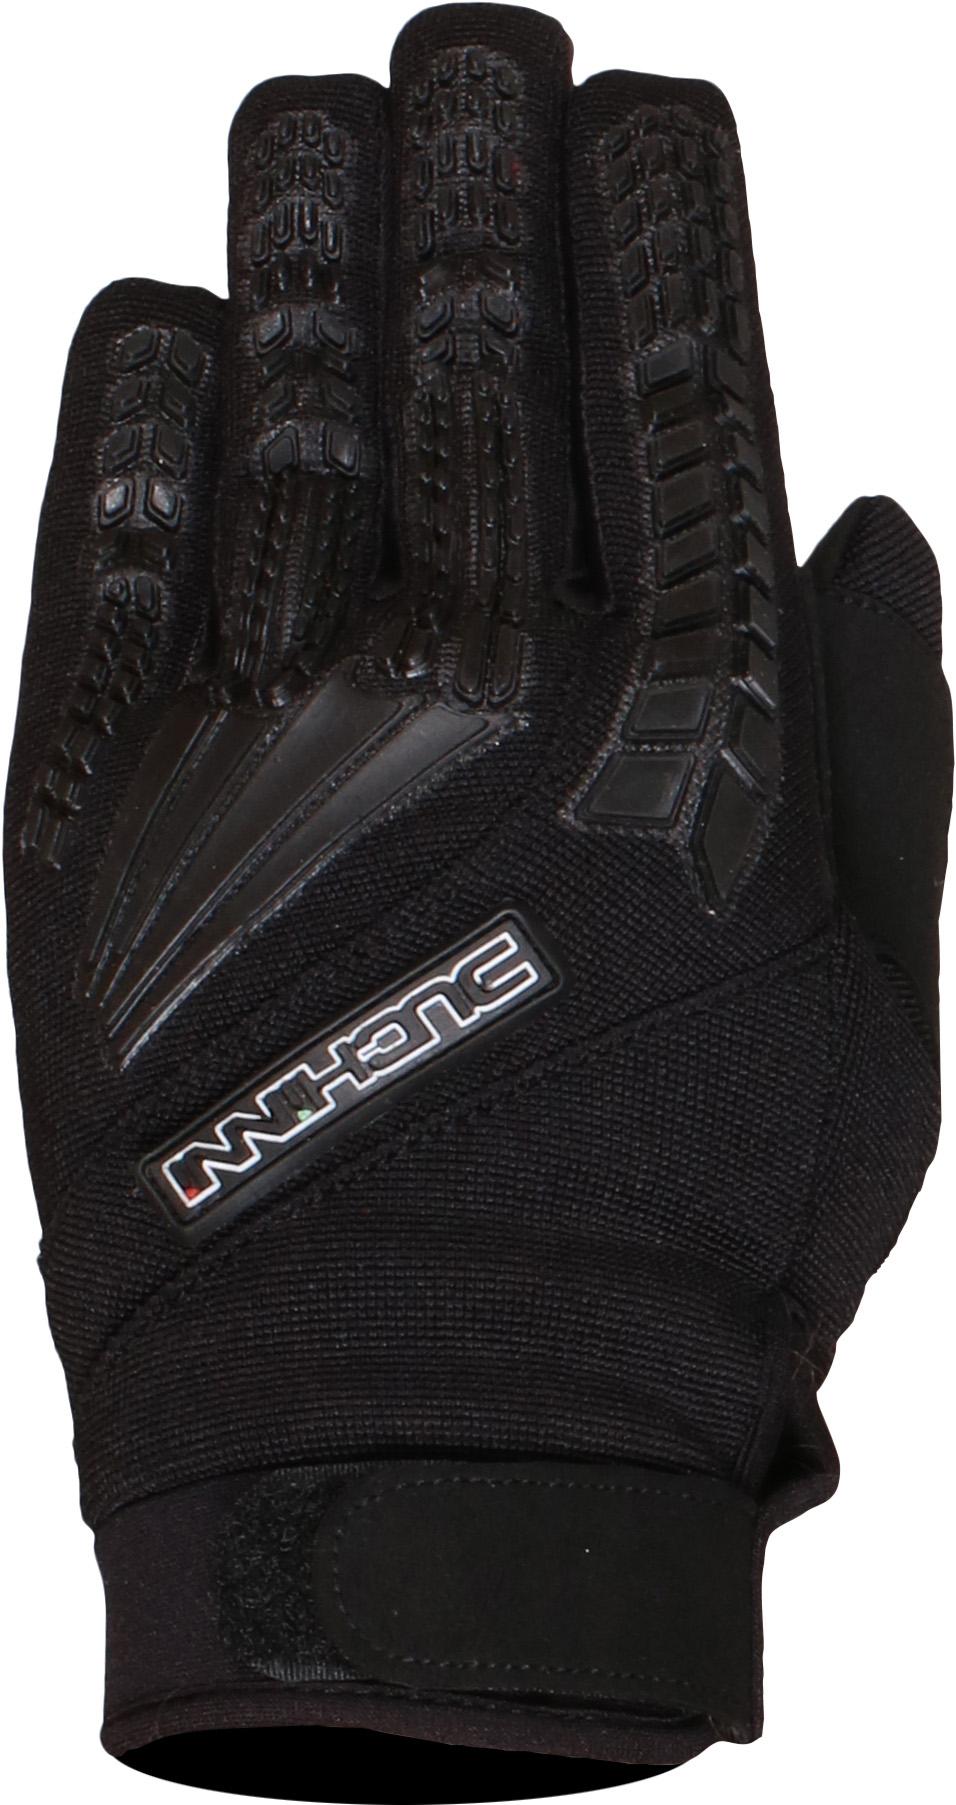 Duchinni Focus Motorcycle Gloves - Black, 2Xl